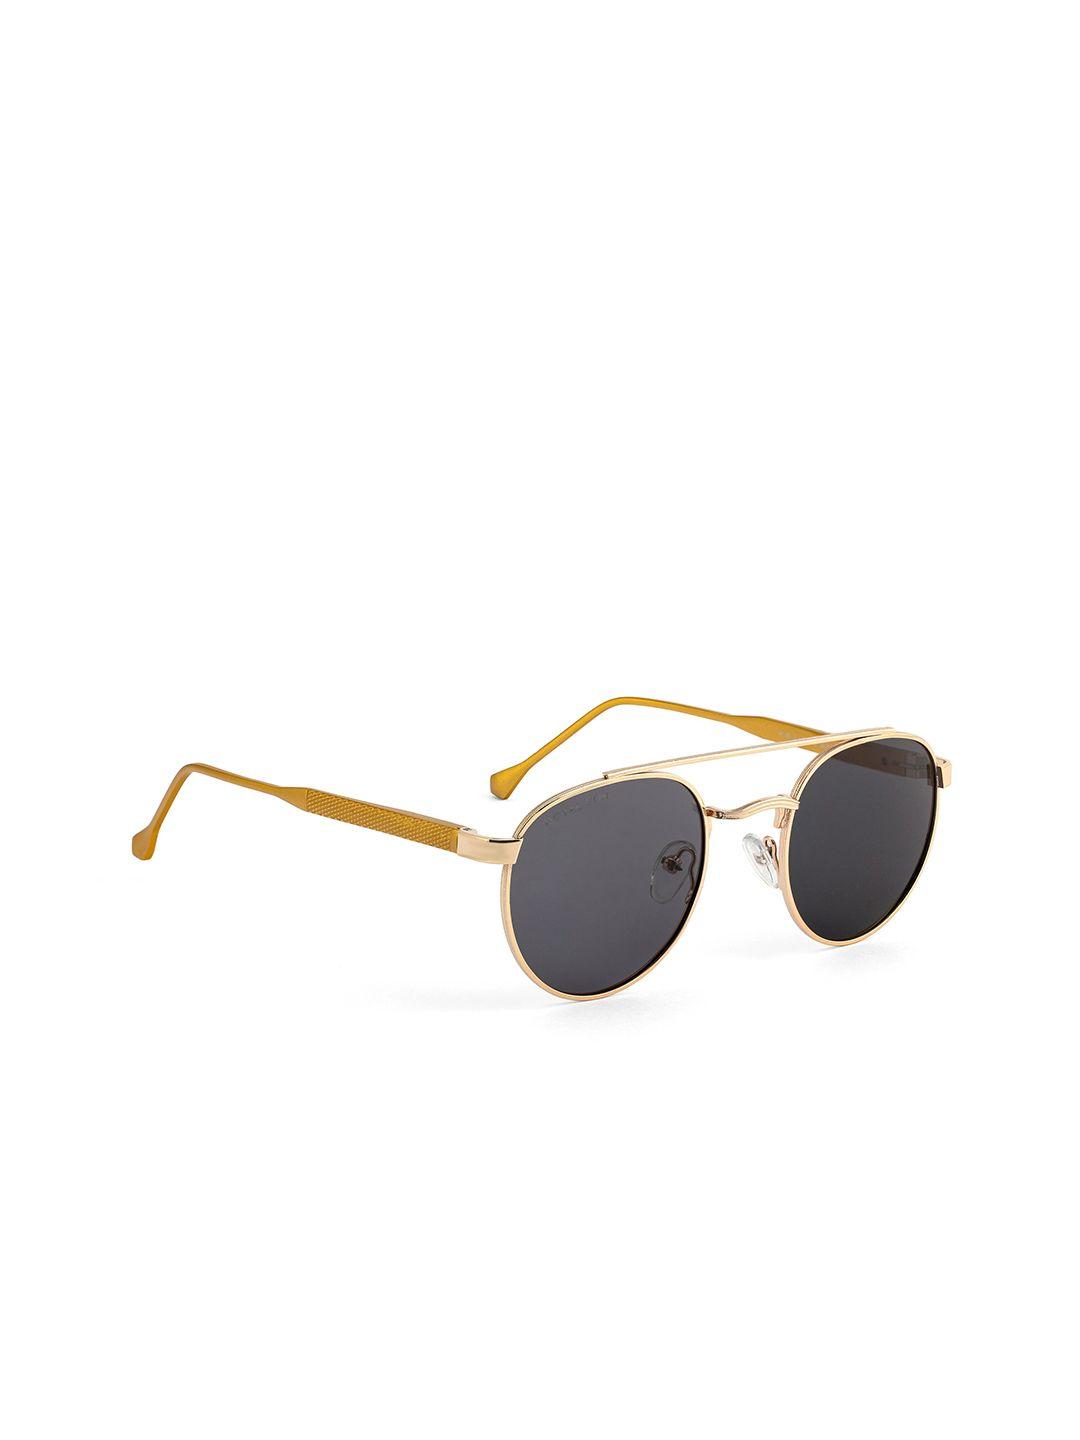 royal son unisex black lens & gold-toned round sunglasses with polarised lens